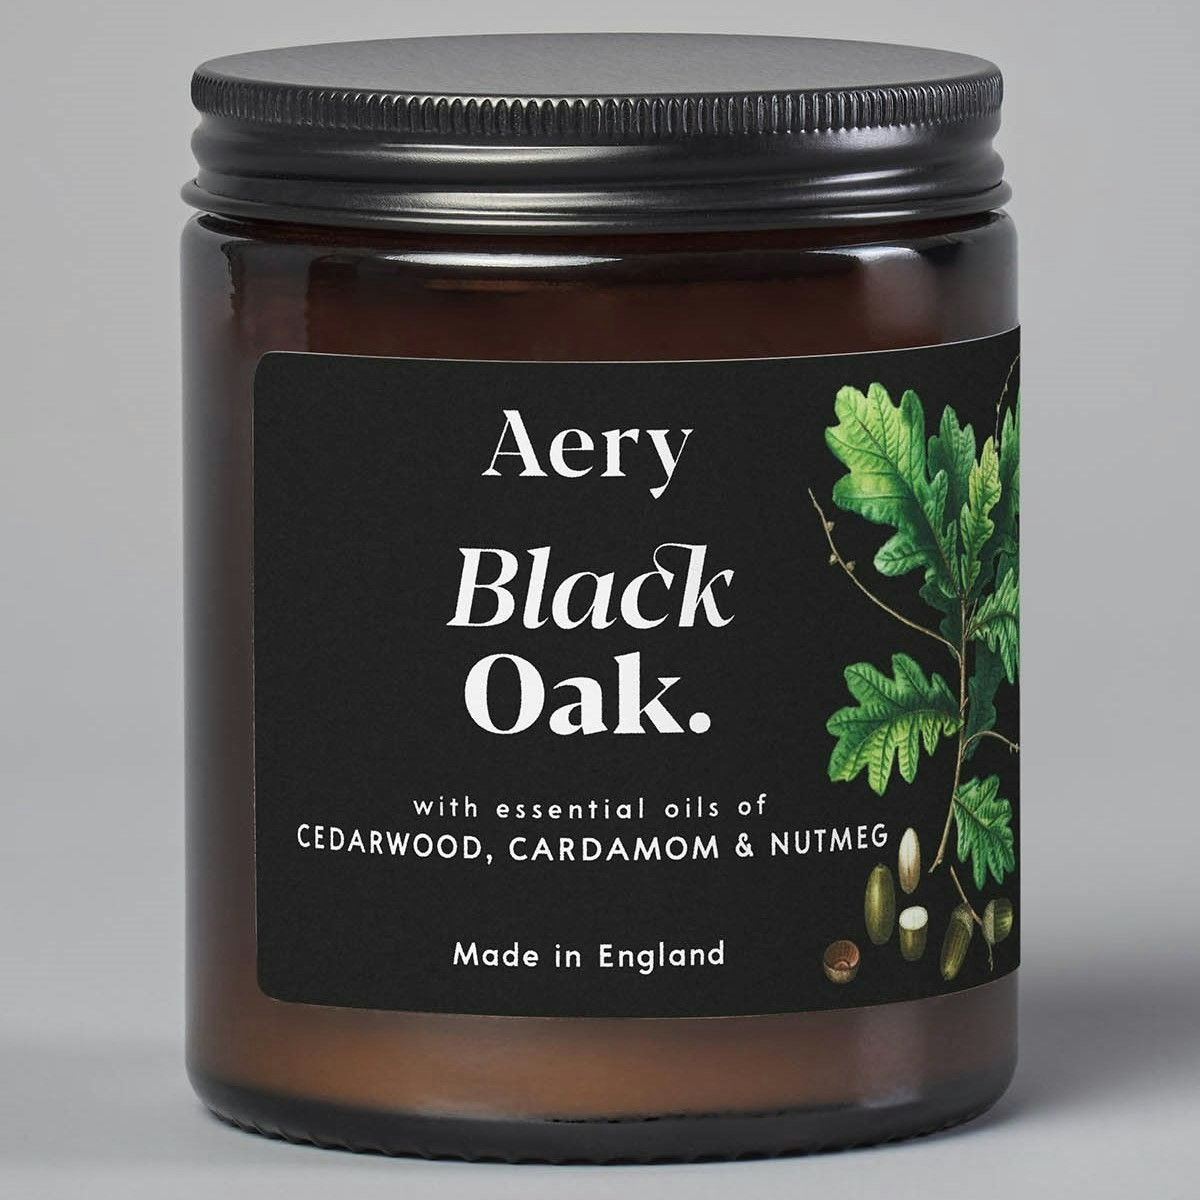 Aery Black Oak